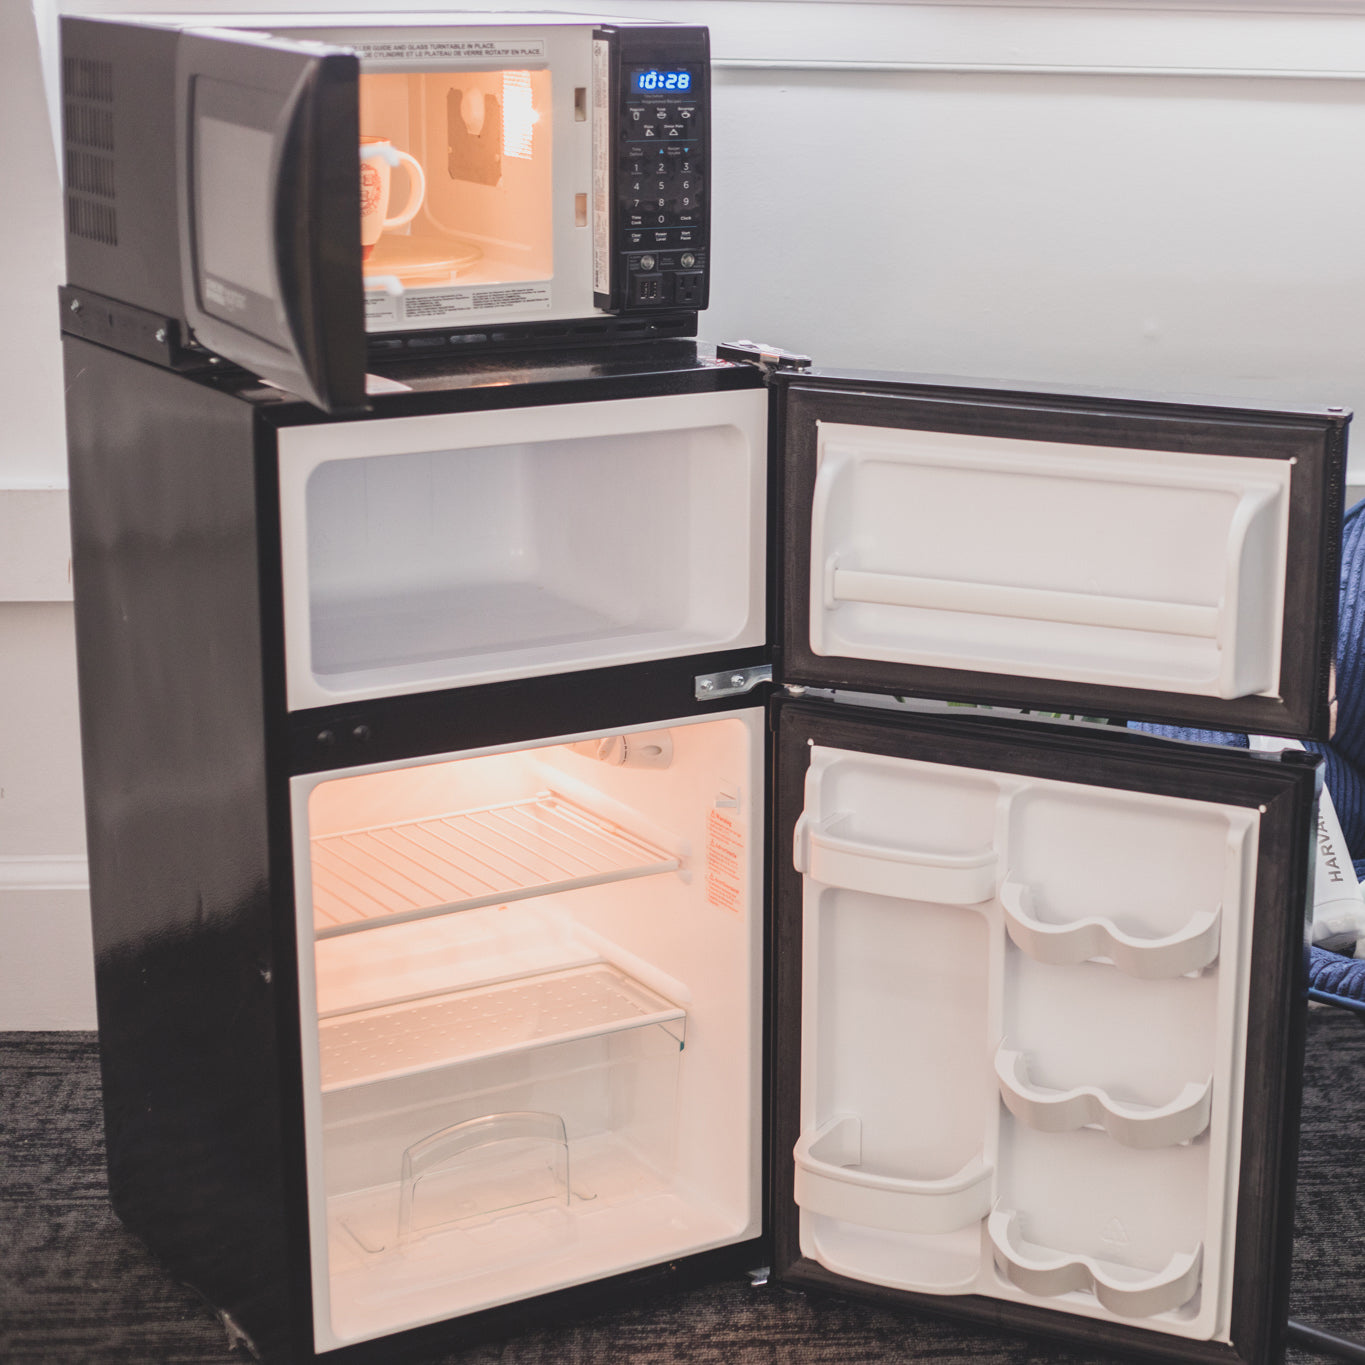 College dorm microwave - appliances - by owner - sale - craigslist